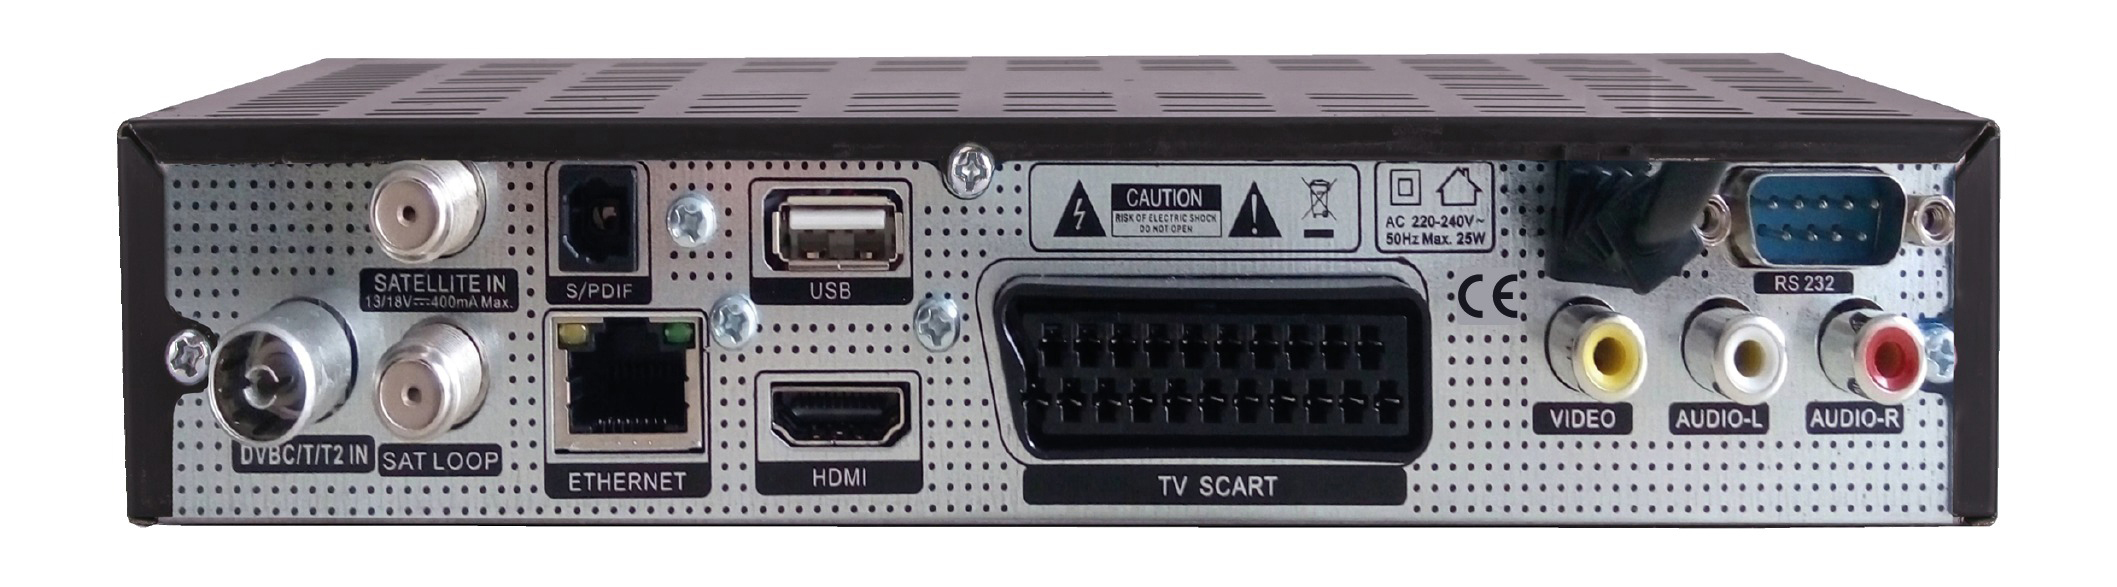 DVB-T2 PVR Twin Receiver DVB-C, Tuner, Sloth DVB-C2, Combo DVB-S, RED HD, (HDTV, DVB-S2, Combo PVR-Funktion, OPTICUM Plus Schwarz)